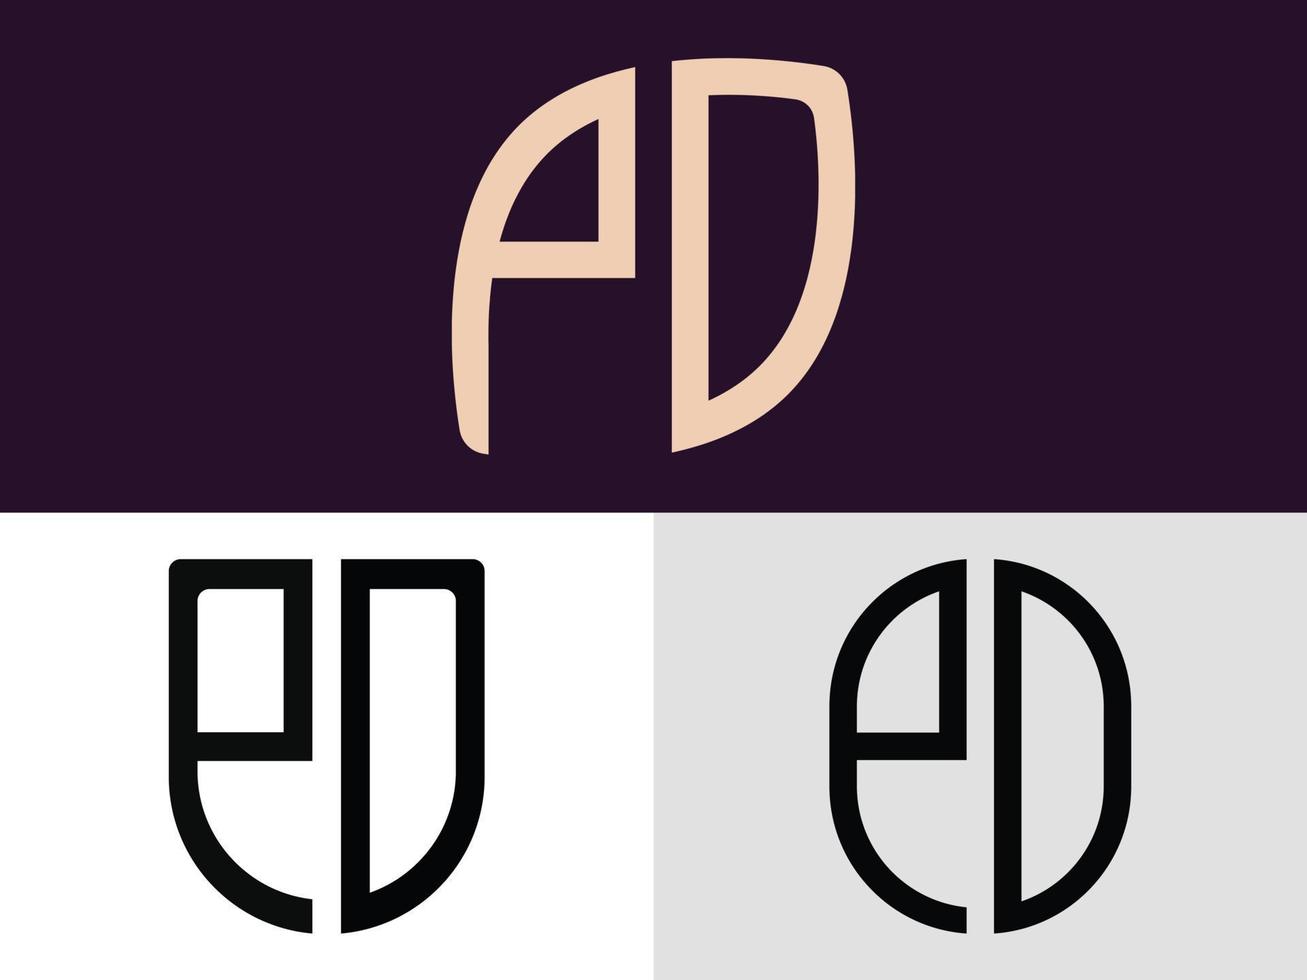 Creative Initial Letters PD Logo Designs Bundle. vector